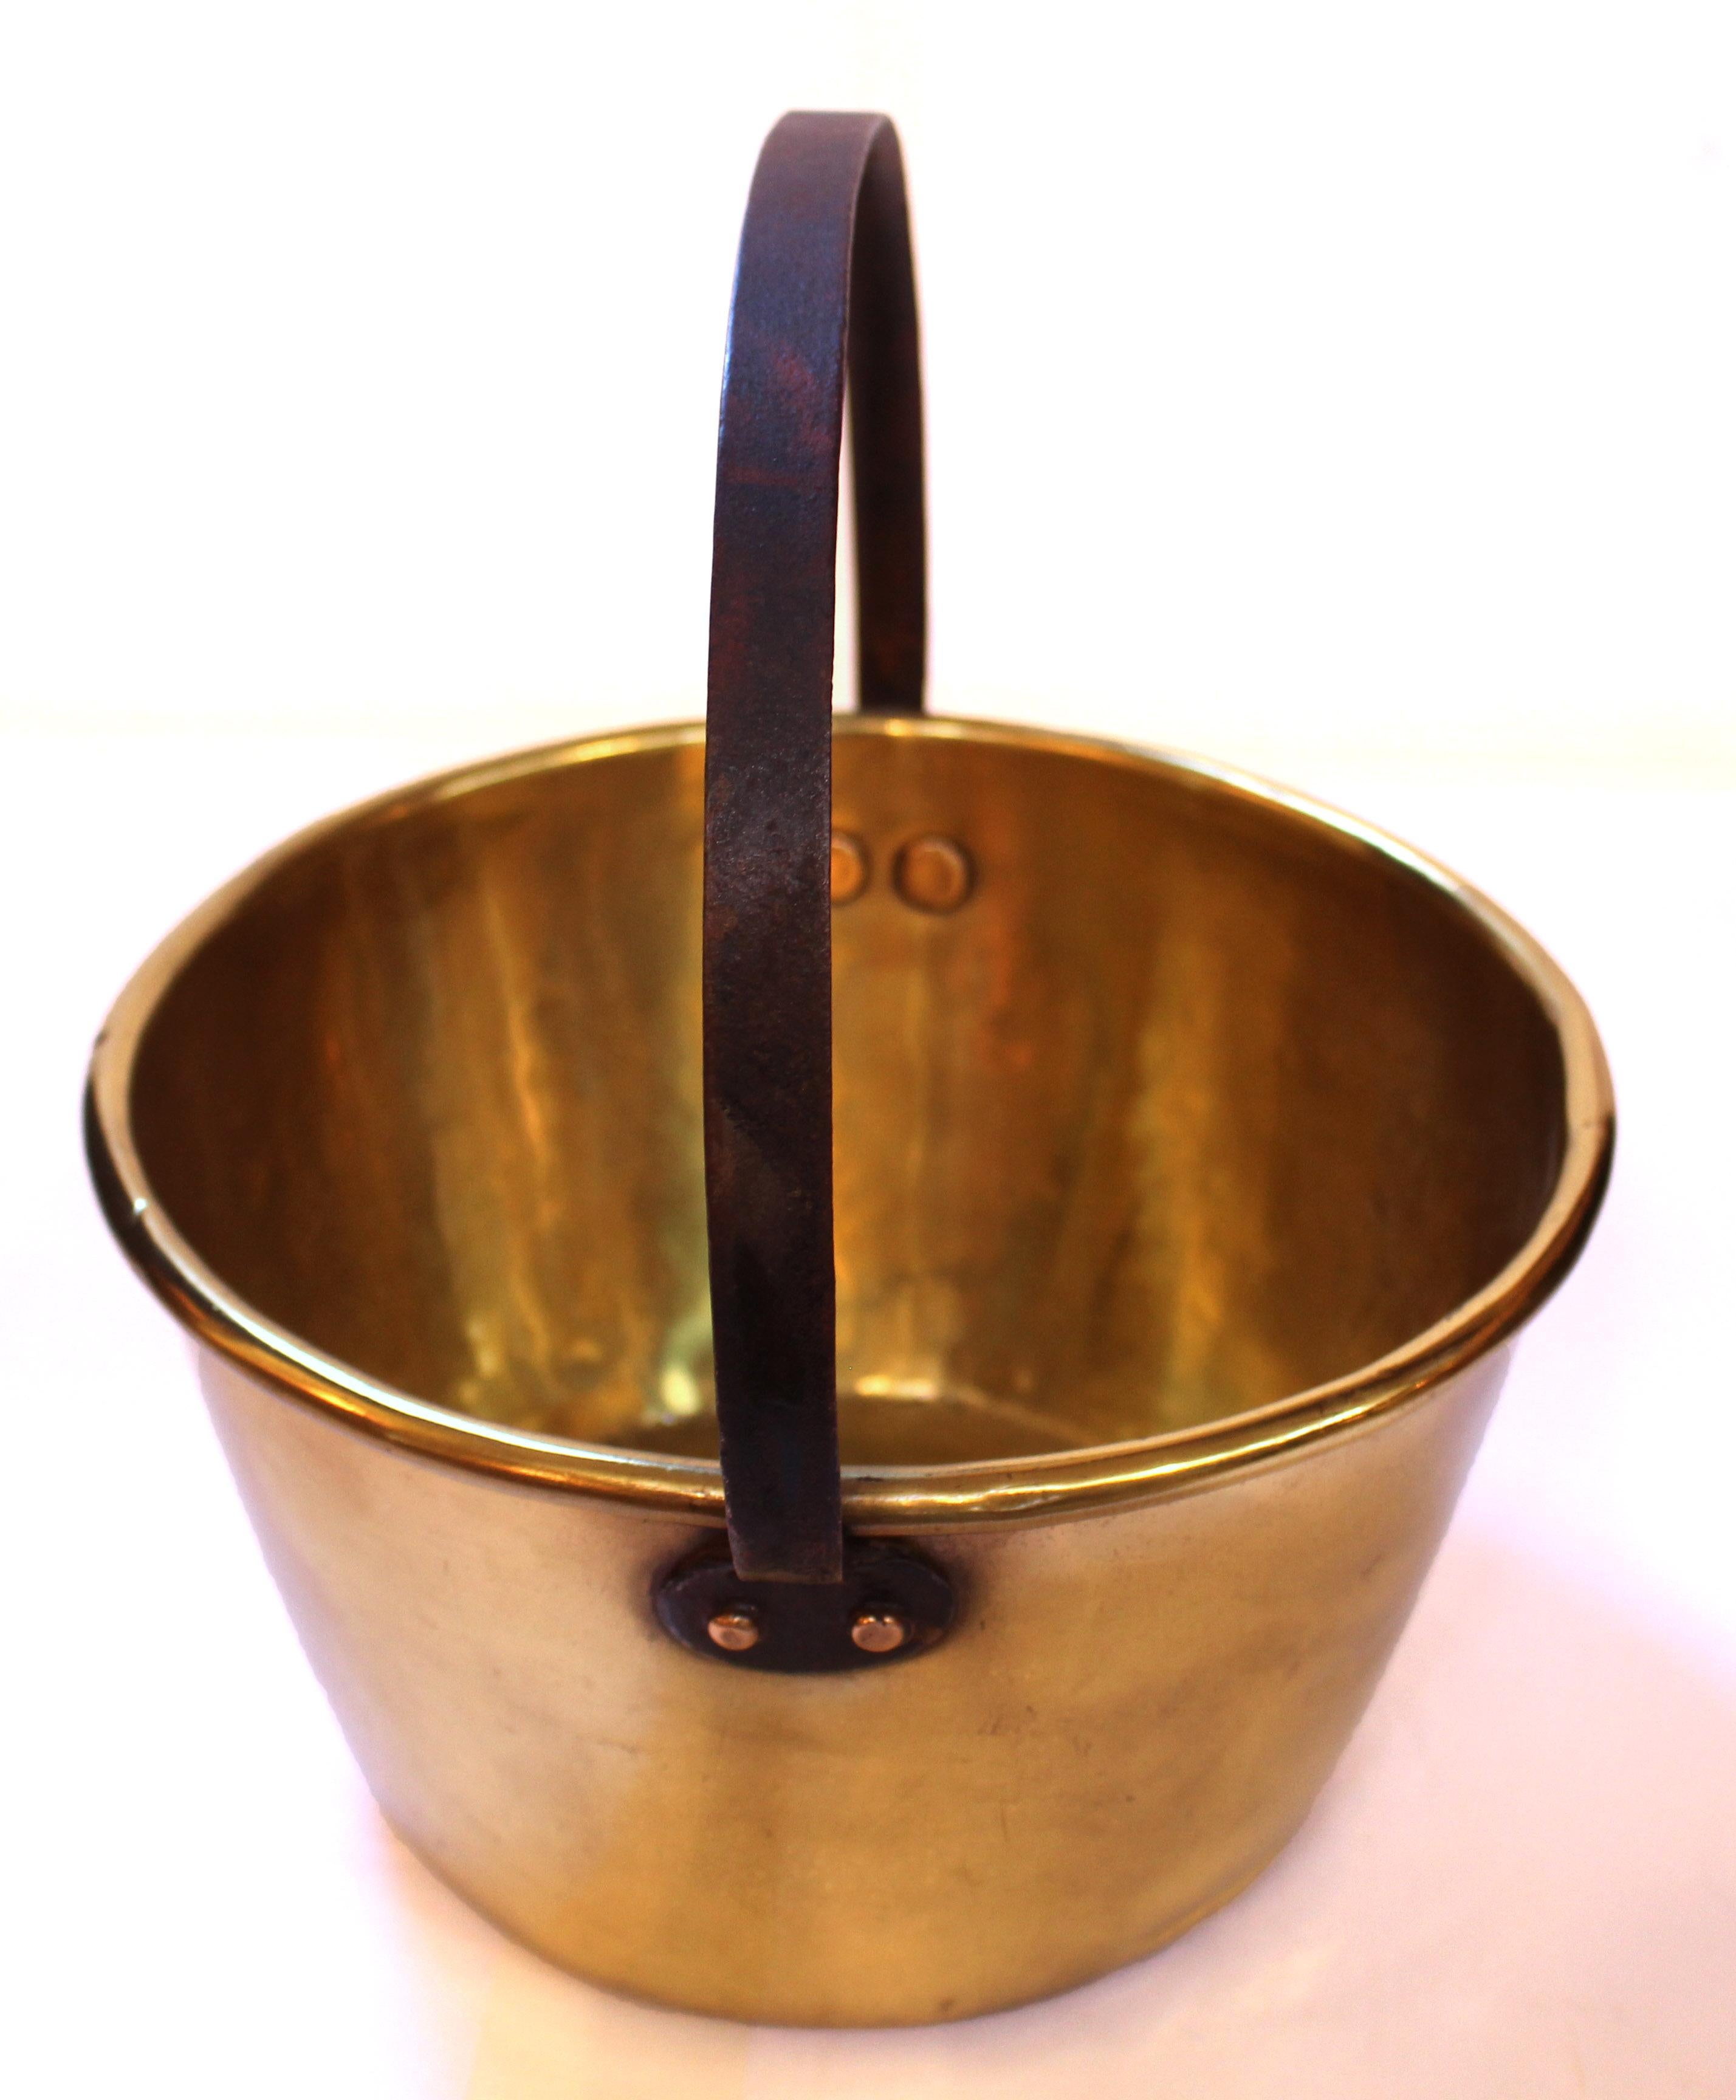 Late 19th century brass milk bucket, English. Brass riveted fixed position iron handle.
11 7/8